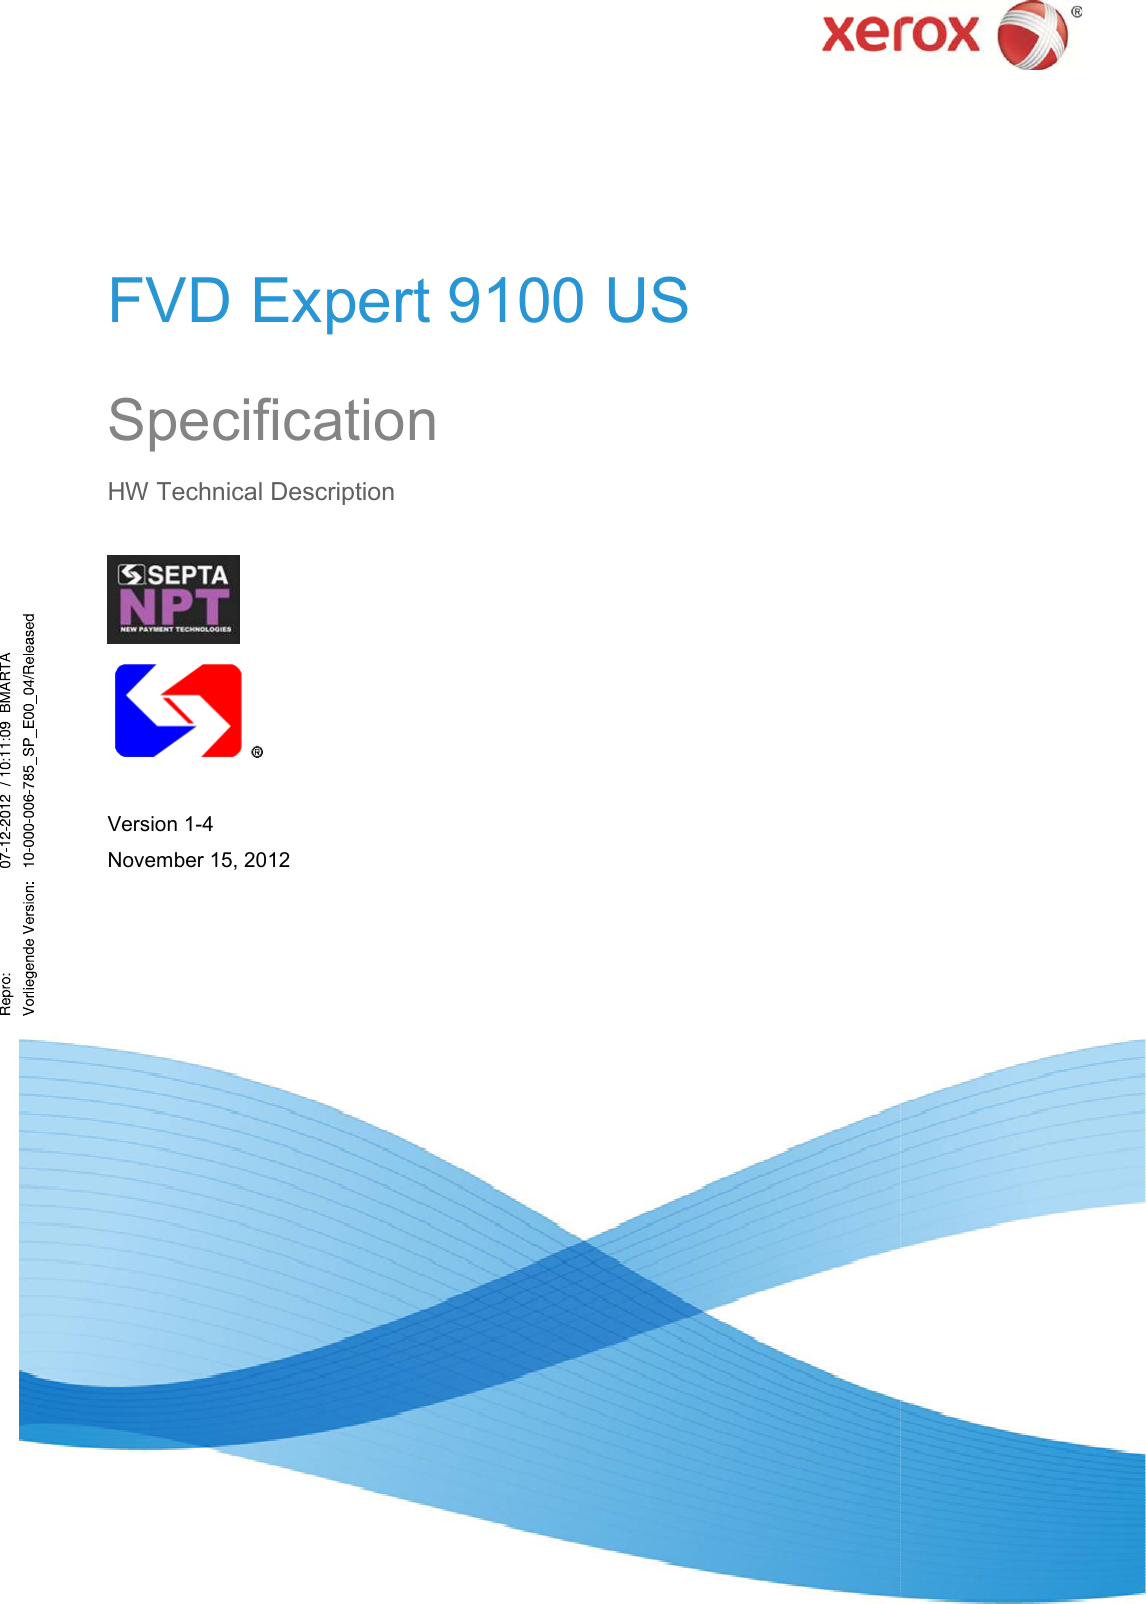 FVD Expert Specification HW Technical Description     Version 1-4 November 15, 2012    9100 US    